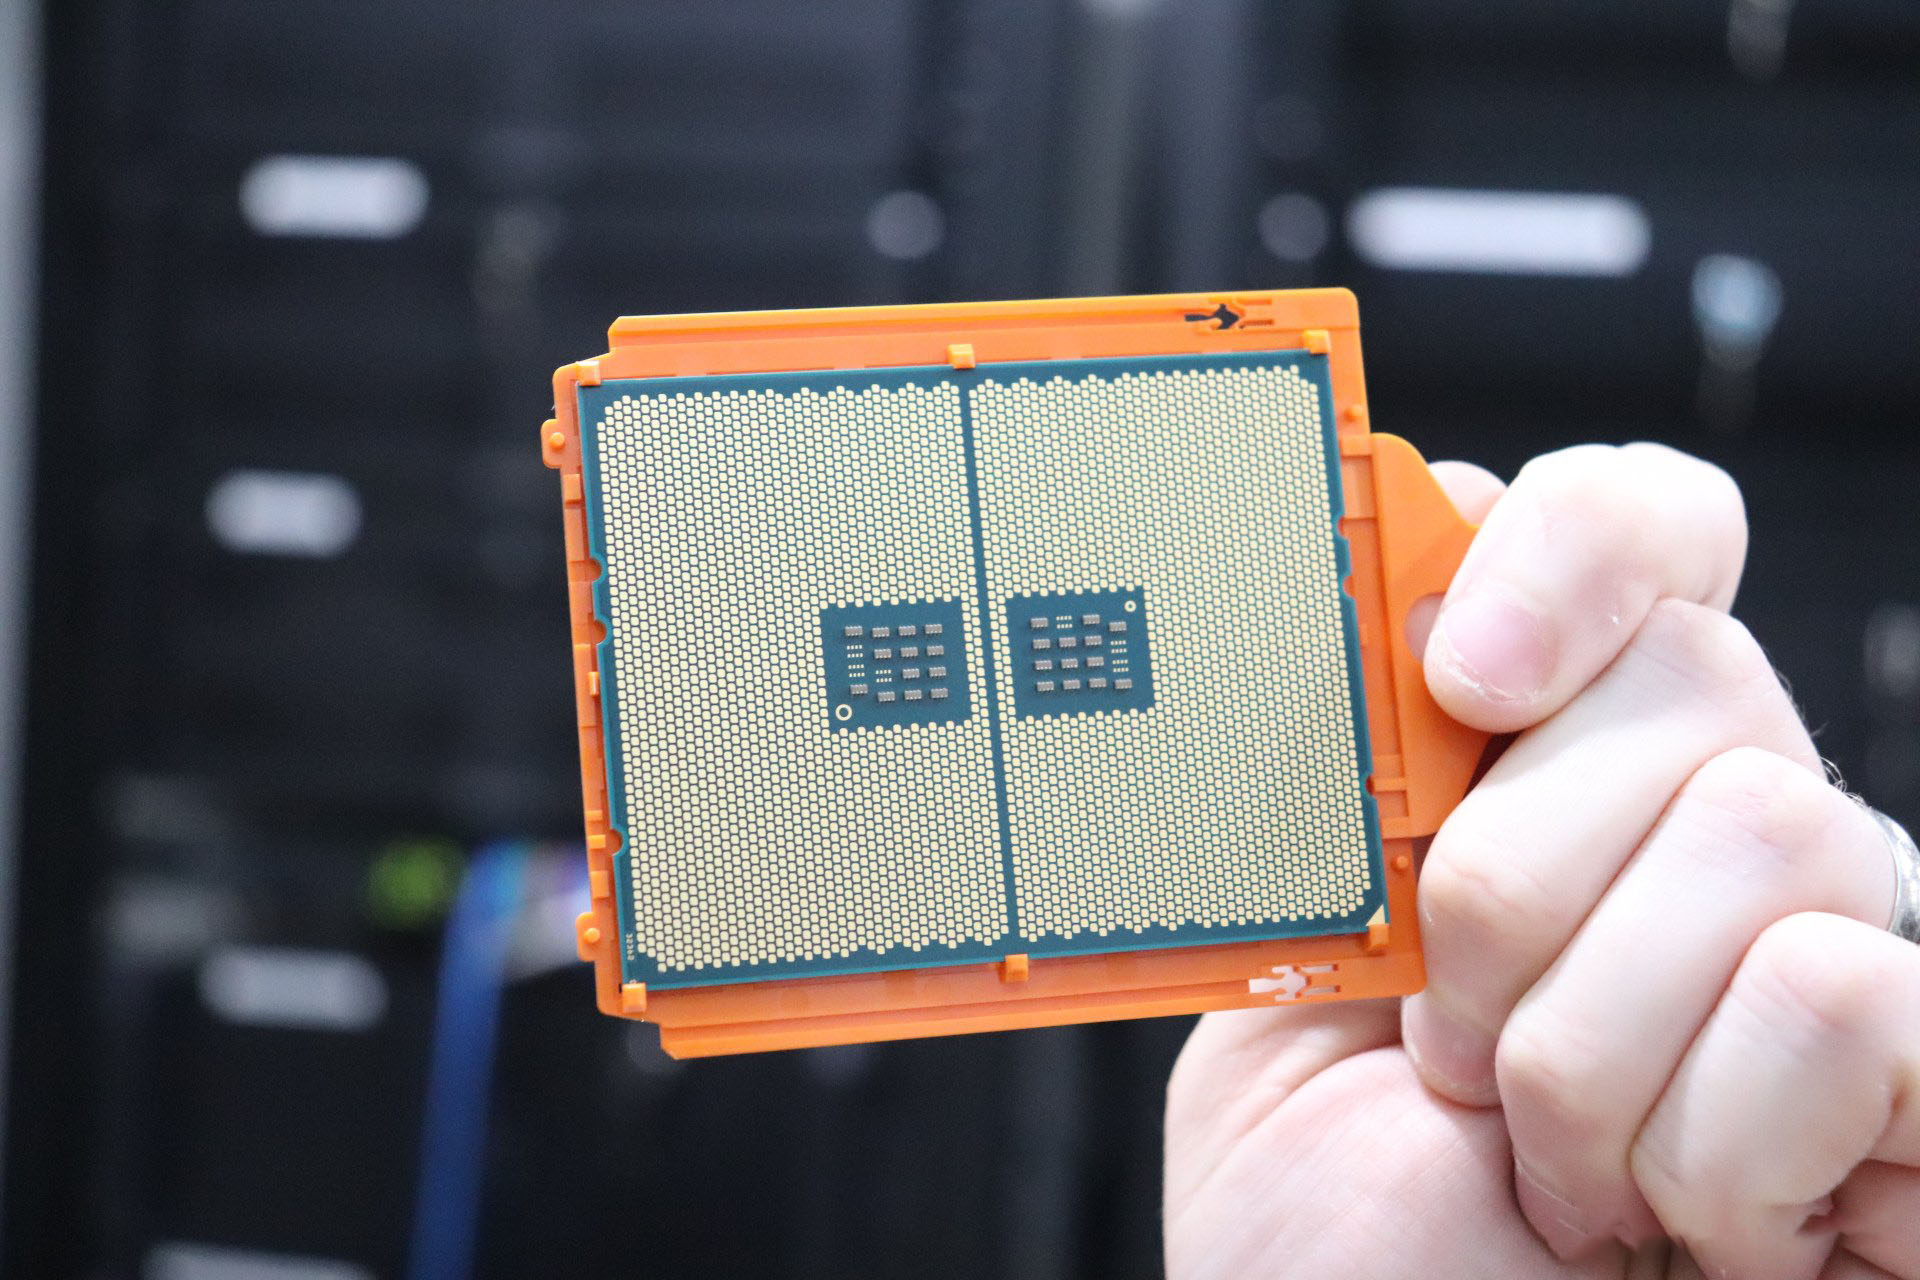 CPU AMD Ryzen Threadripper 3960X (3.8 - 4.5Ghz / 24 core 48 thread / socket sTRX4)
